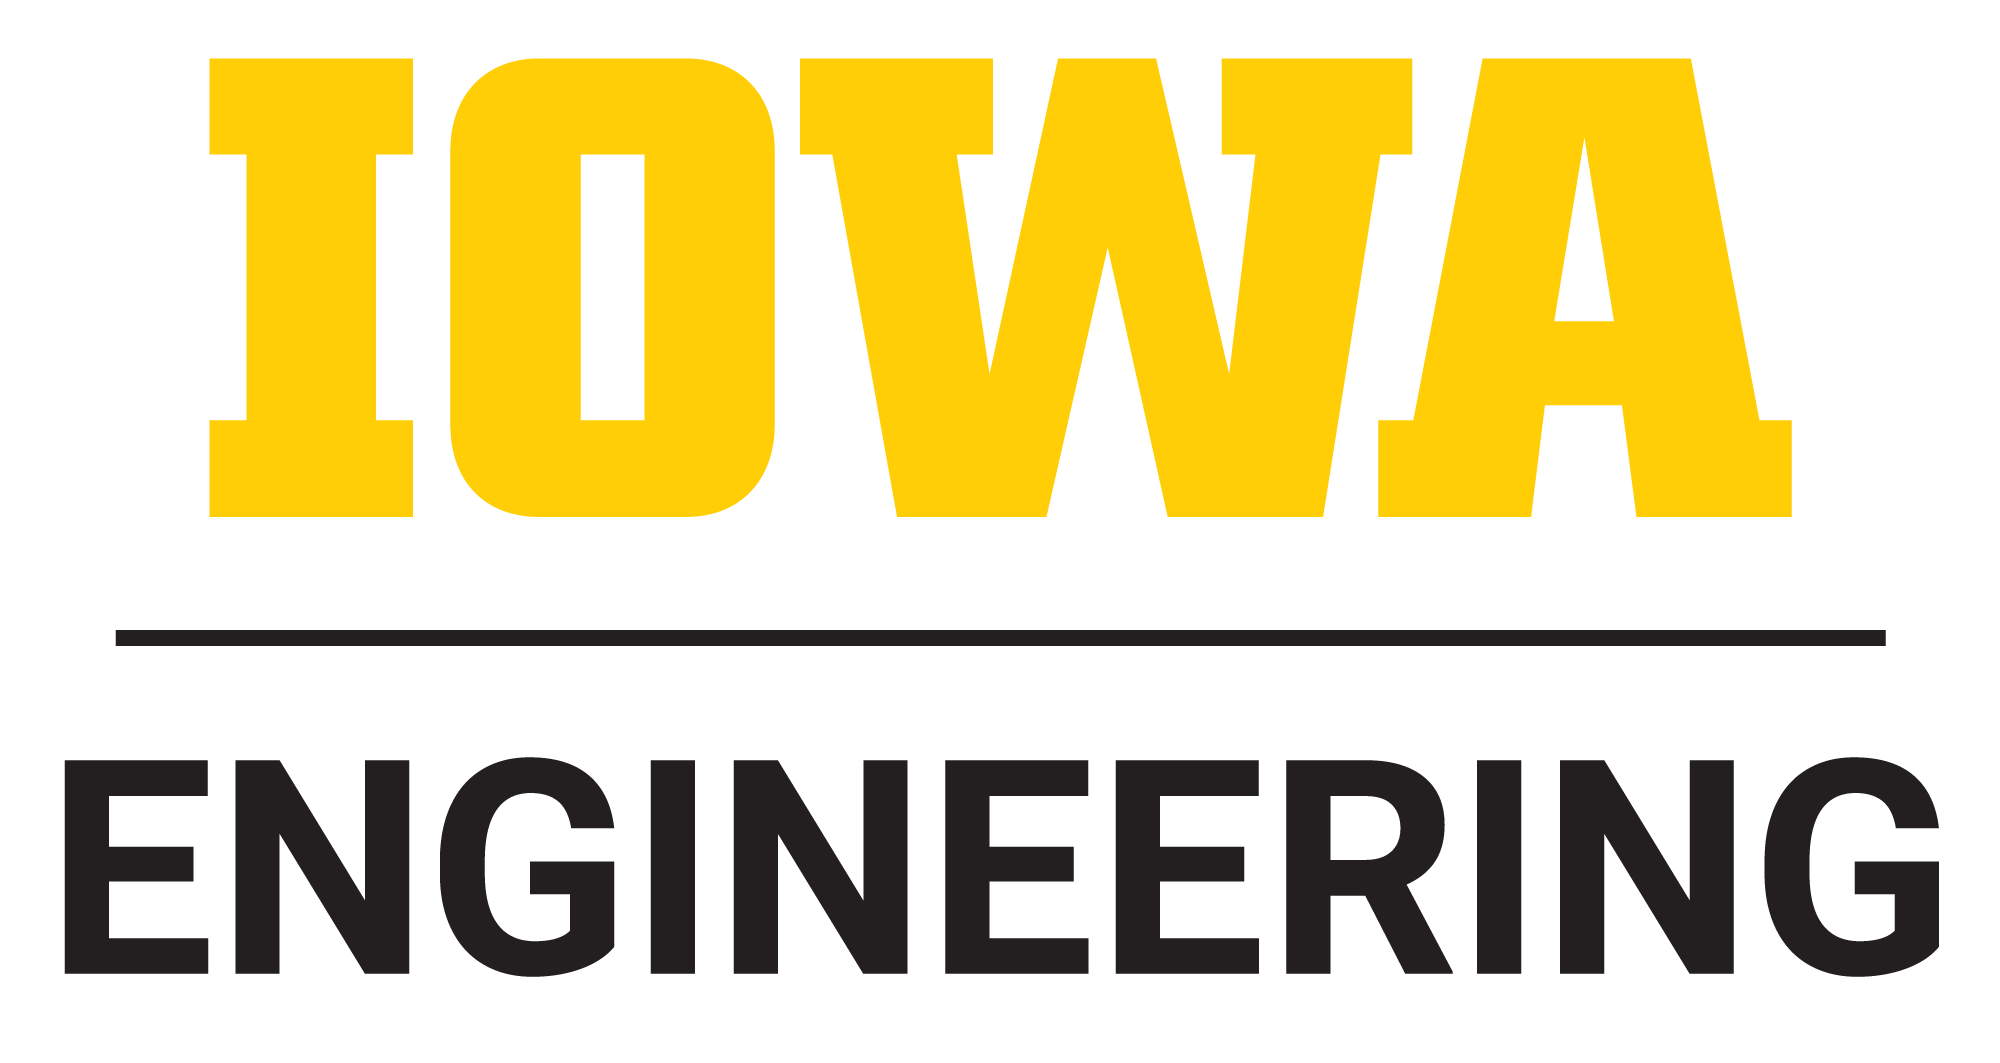 Iowa Engineering logo